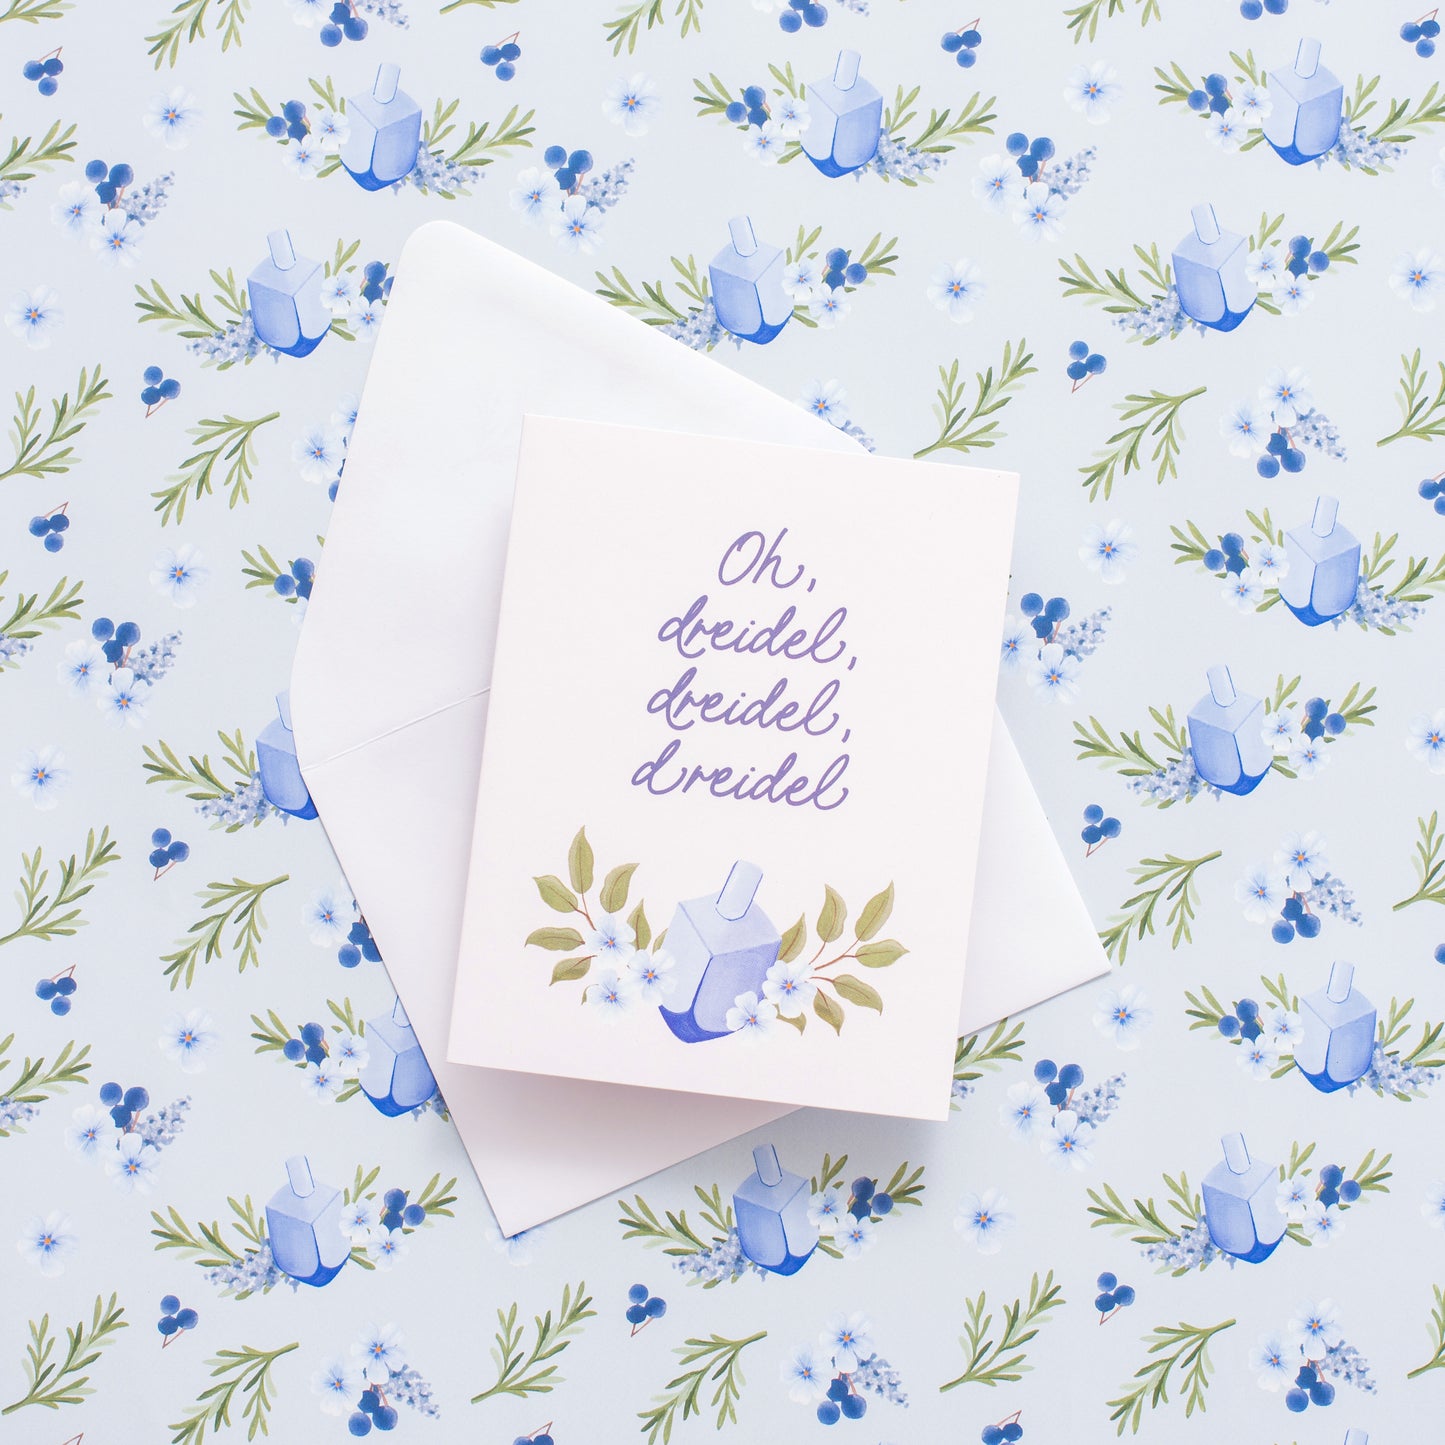 Floral Dreidel Hanukkah Greeting Card